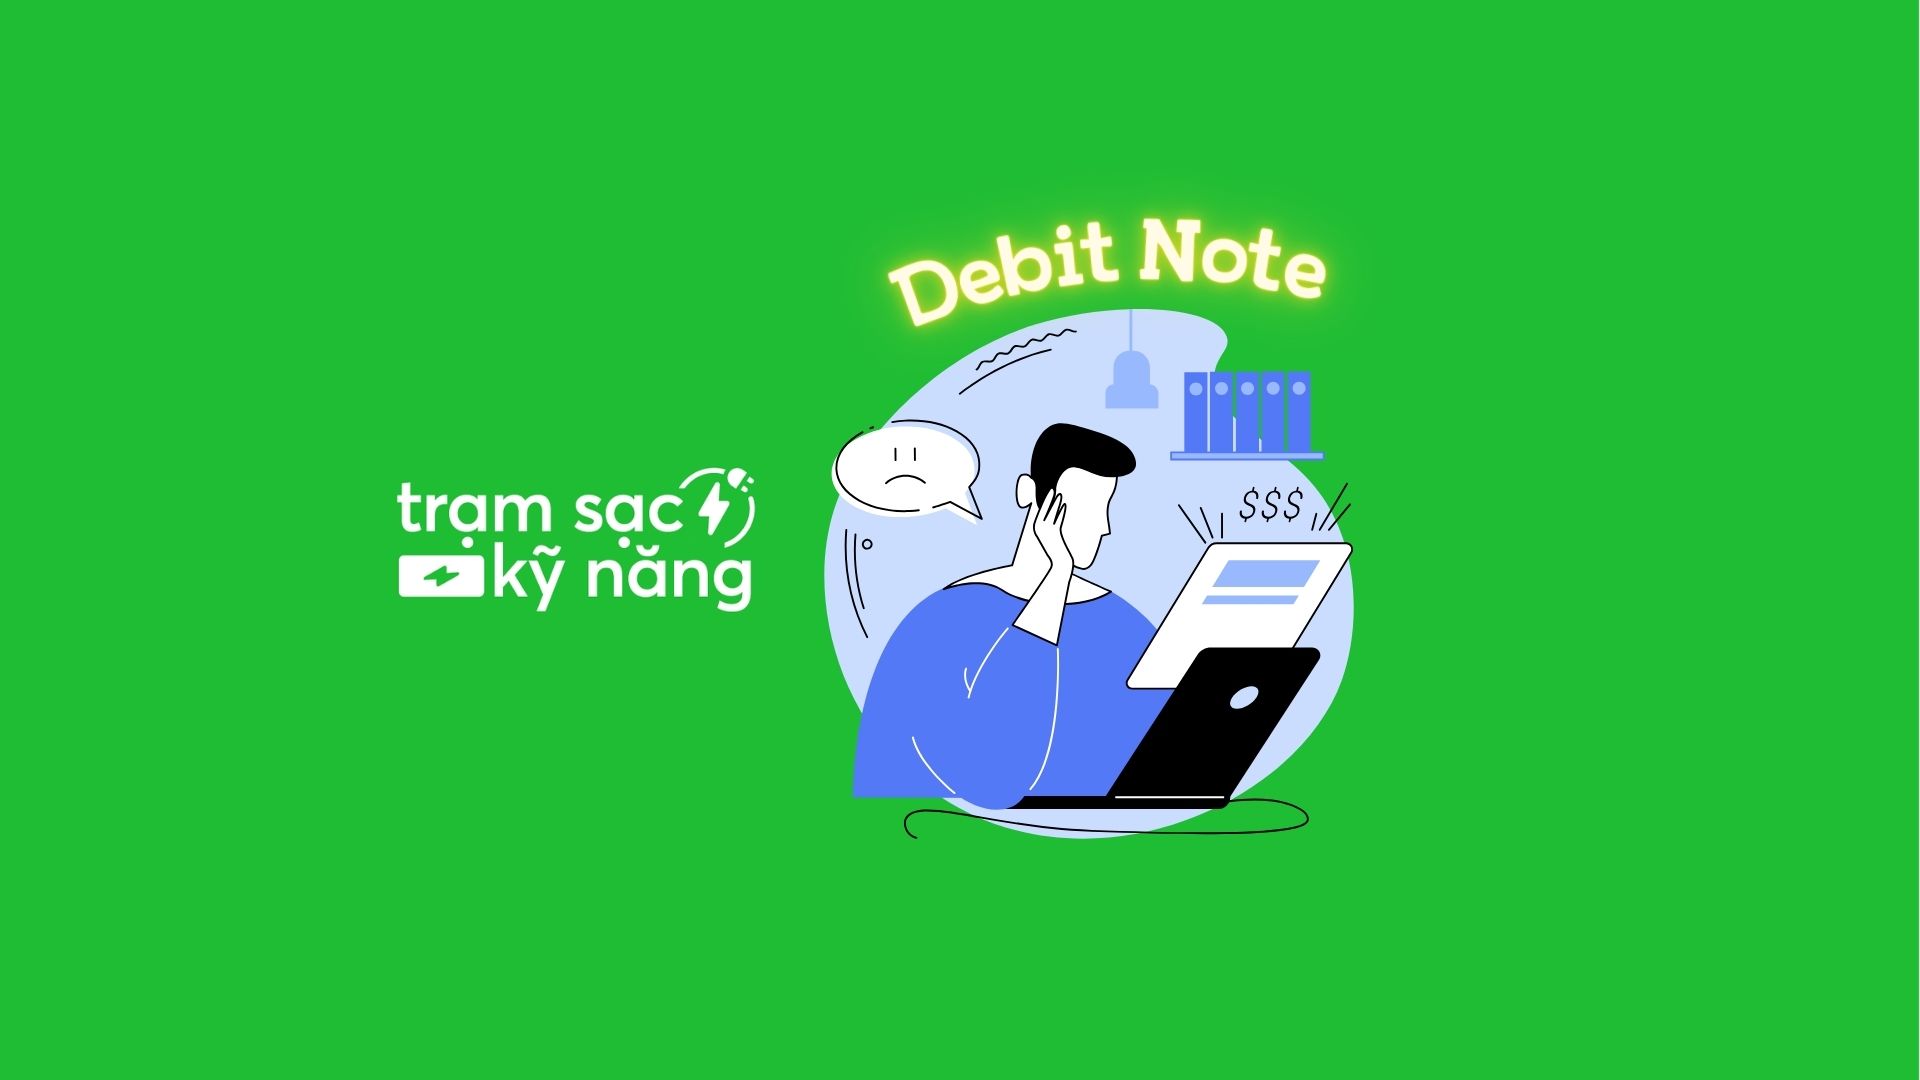 Debit Note là gì?